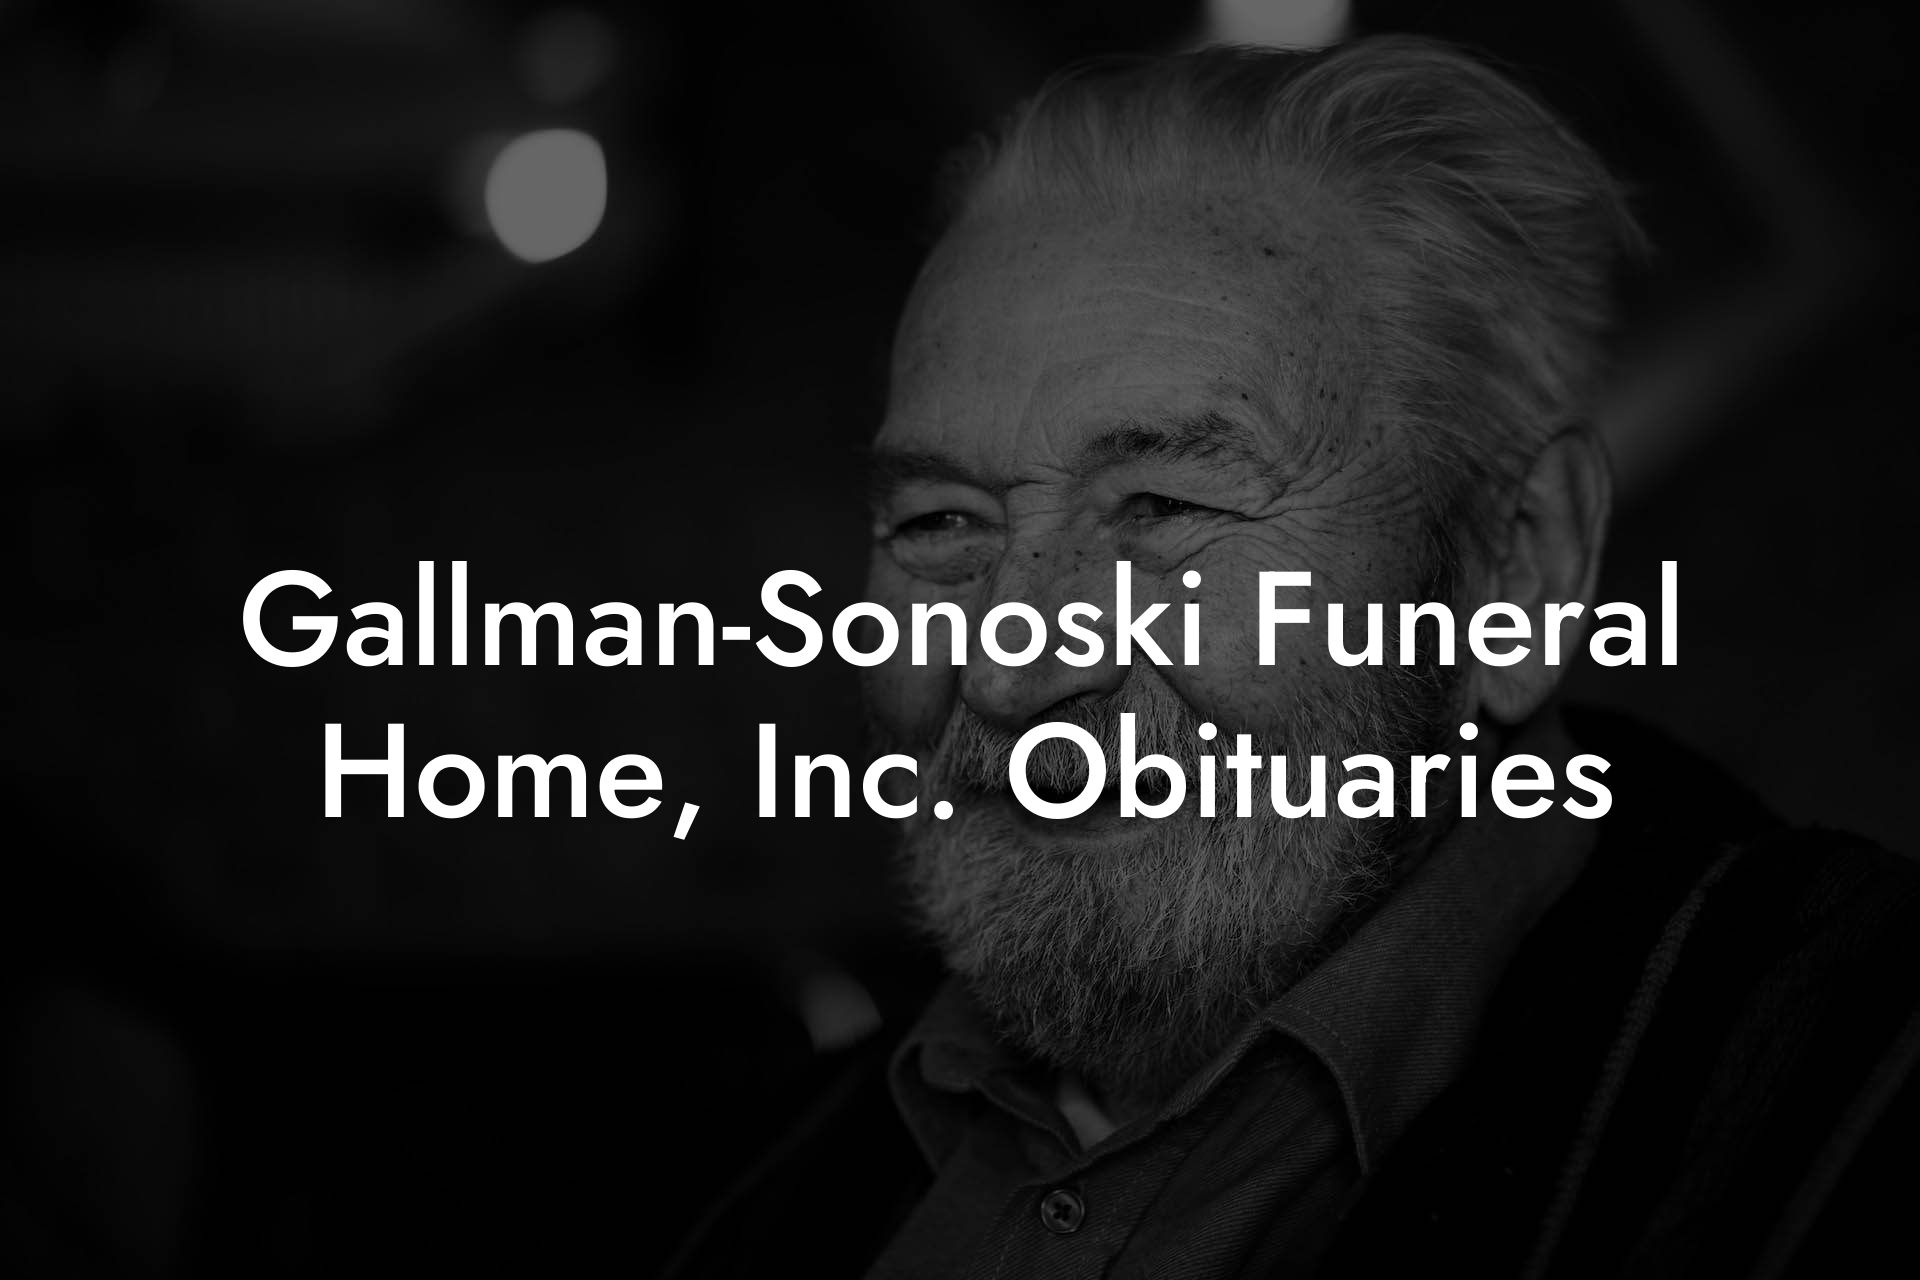 Gallman-Sonoski Funeral Home, Inc. Obituaries